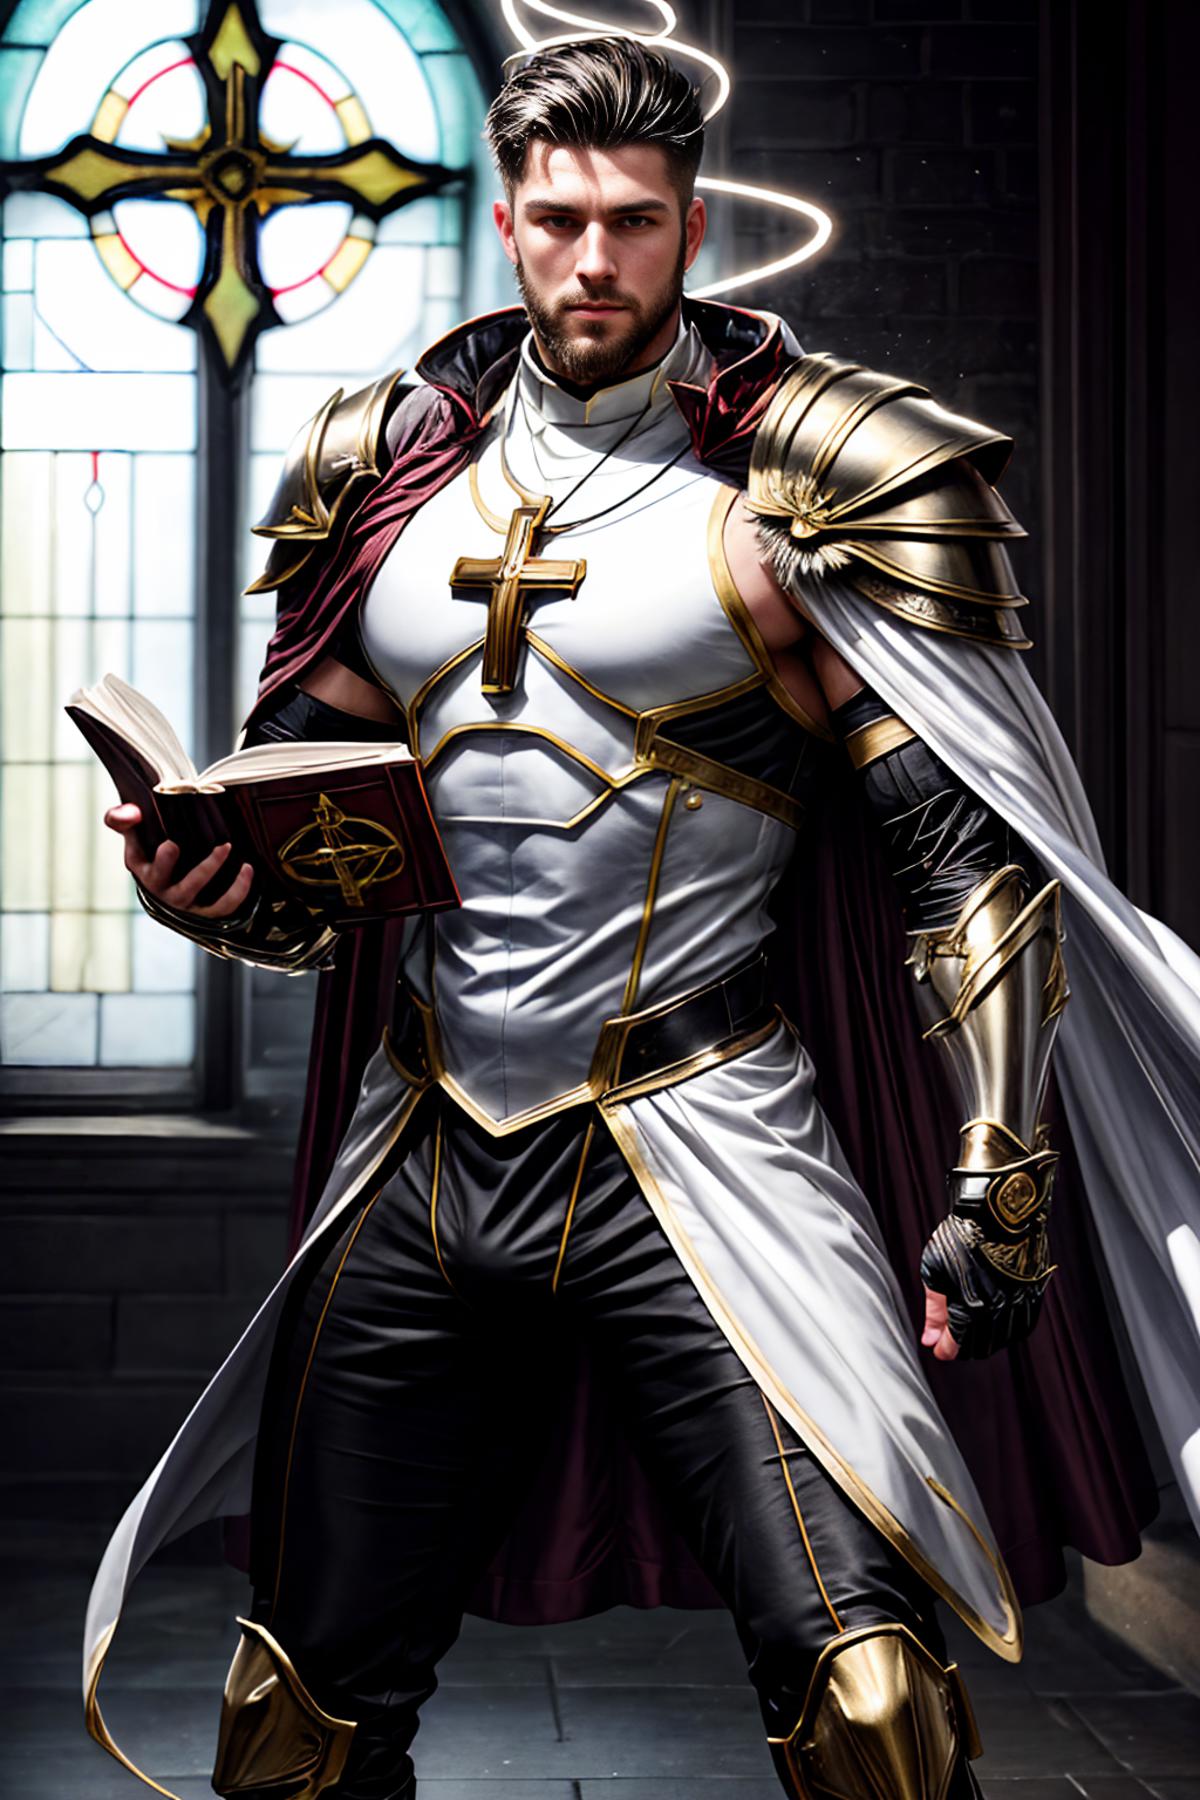 Battle Priest image by Kairen92